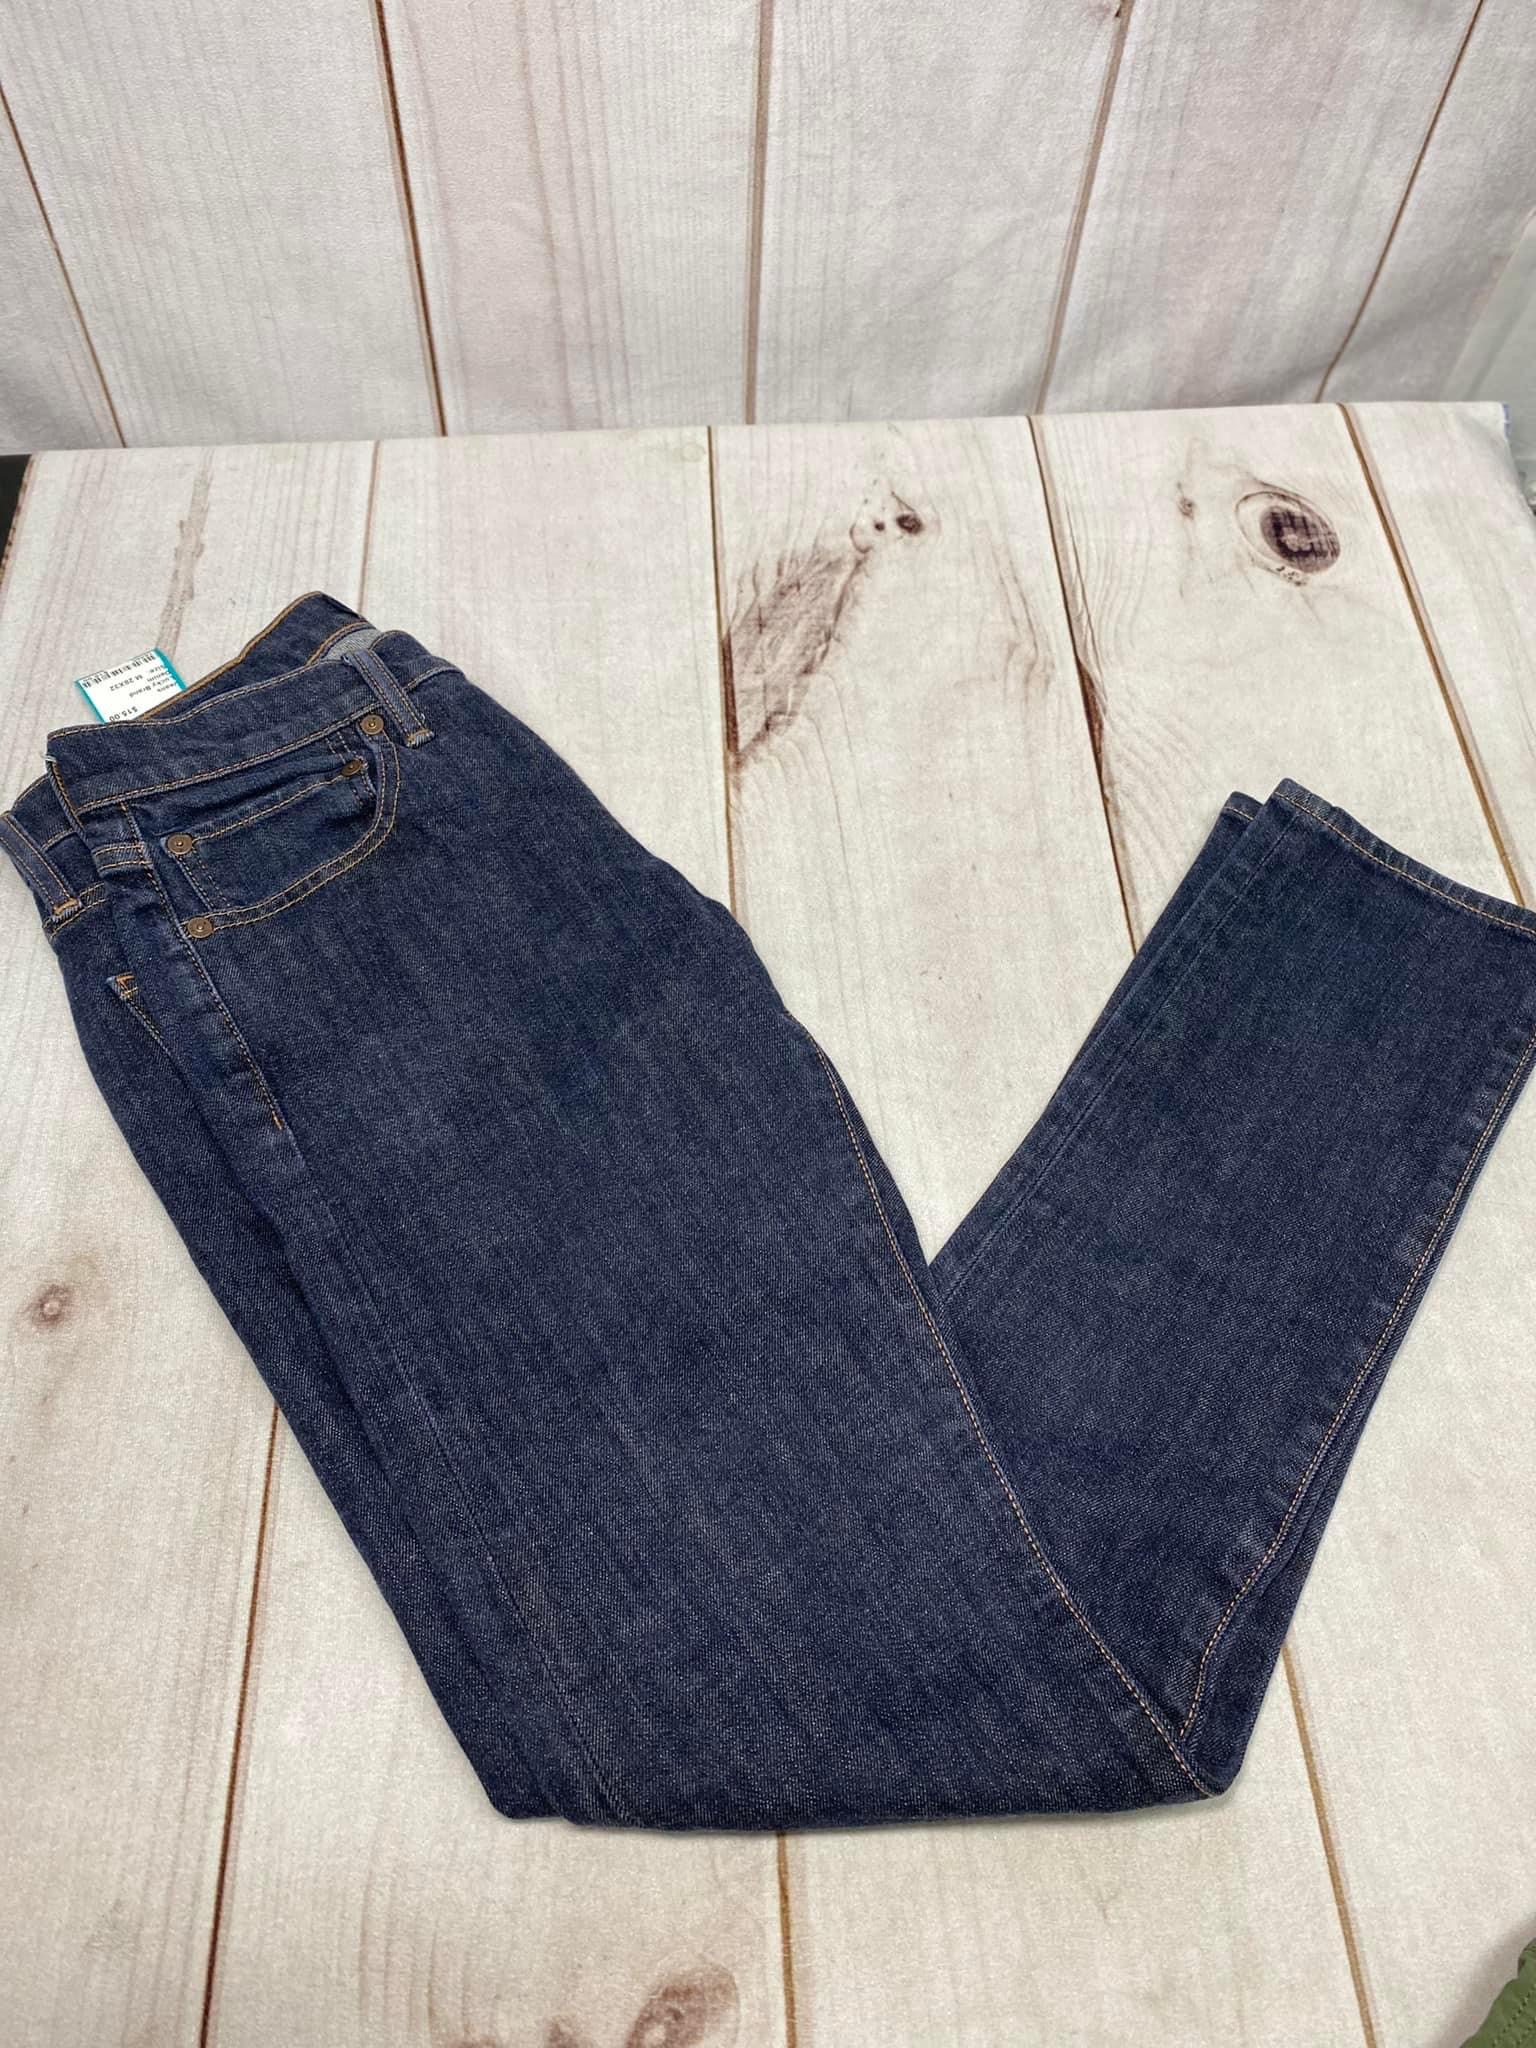 Lucky Brand Jeans - EUC
Dark Denim - Style 110 Skinny
94% Cotton, 5% Poly, 1% Elastane
Size: Mens 28X32